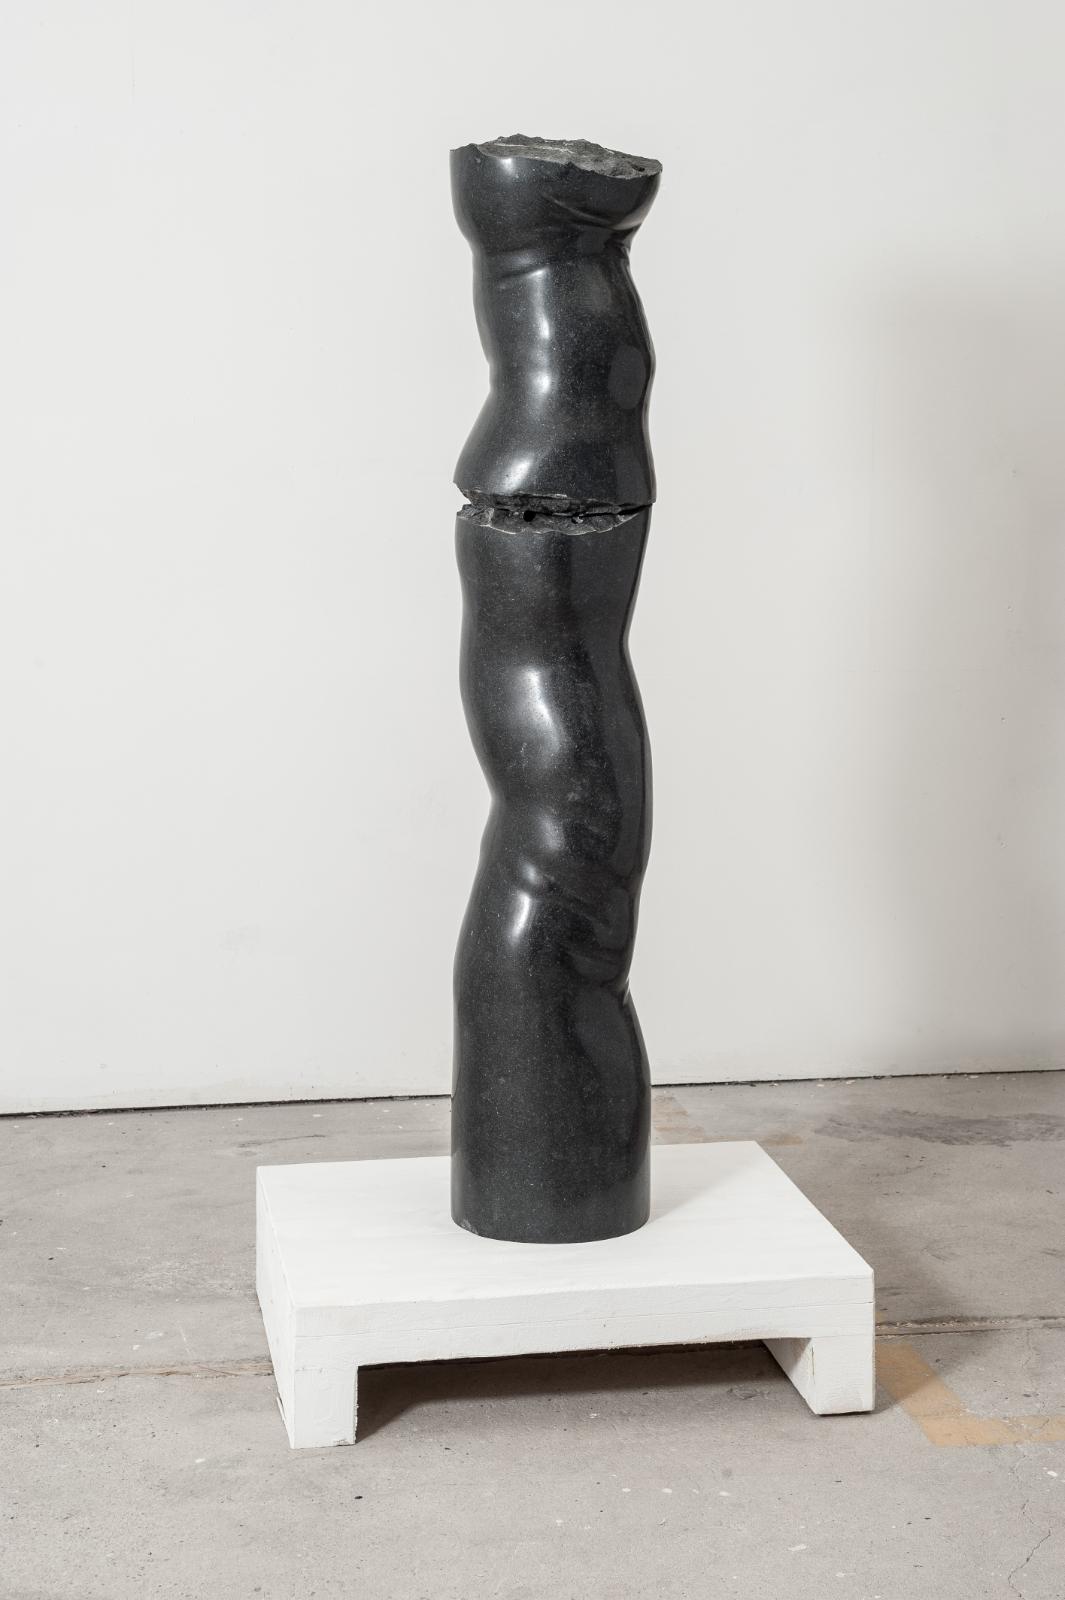 Christoph Traub, Bruch 2-teilig, 2017, Granit, 135 x 25 x 25 cm, trc007ko